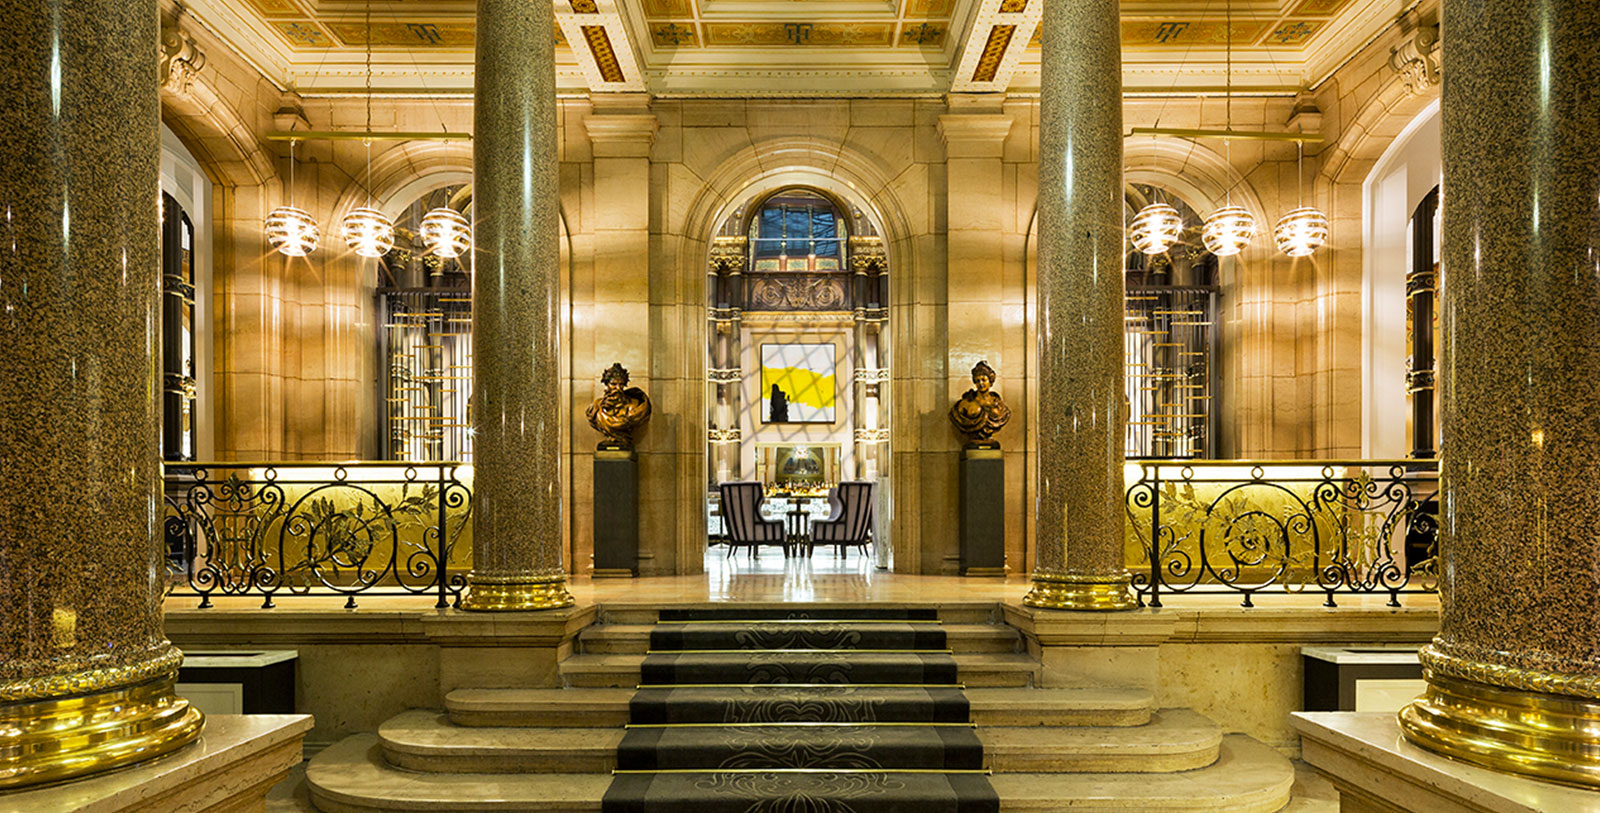 Image of Entrance, Hilton Paris Opera, France, 1889, Member of Historic Hotels Worldwide, Experience